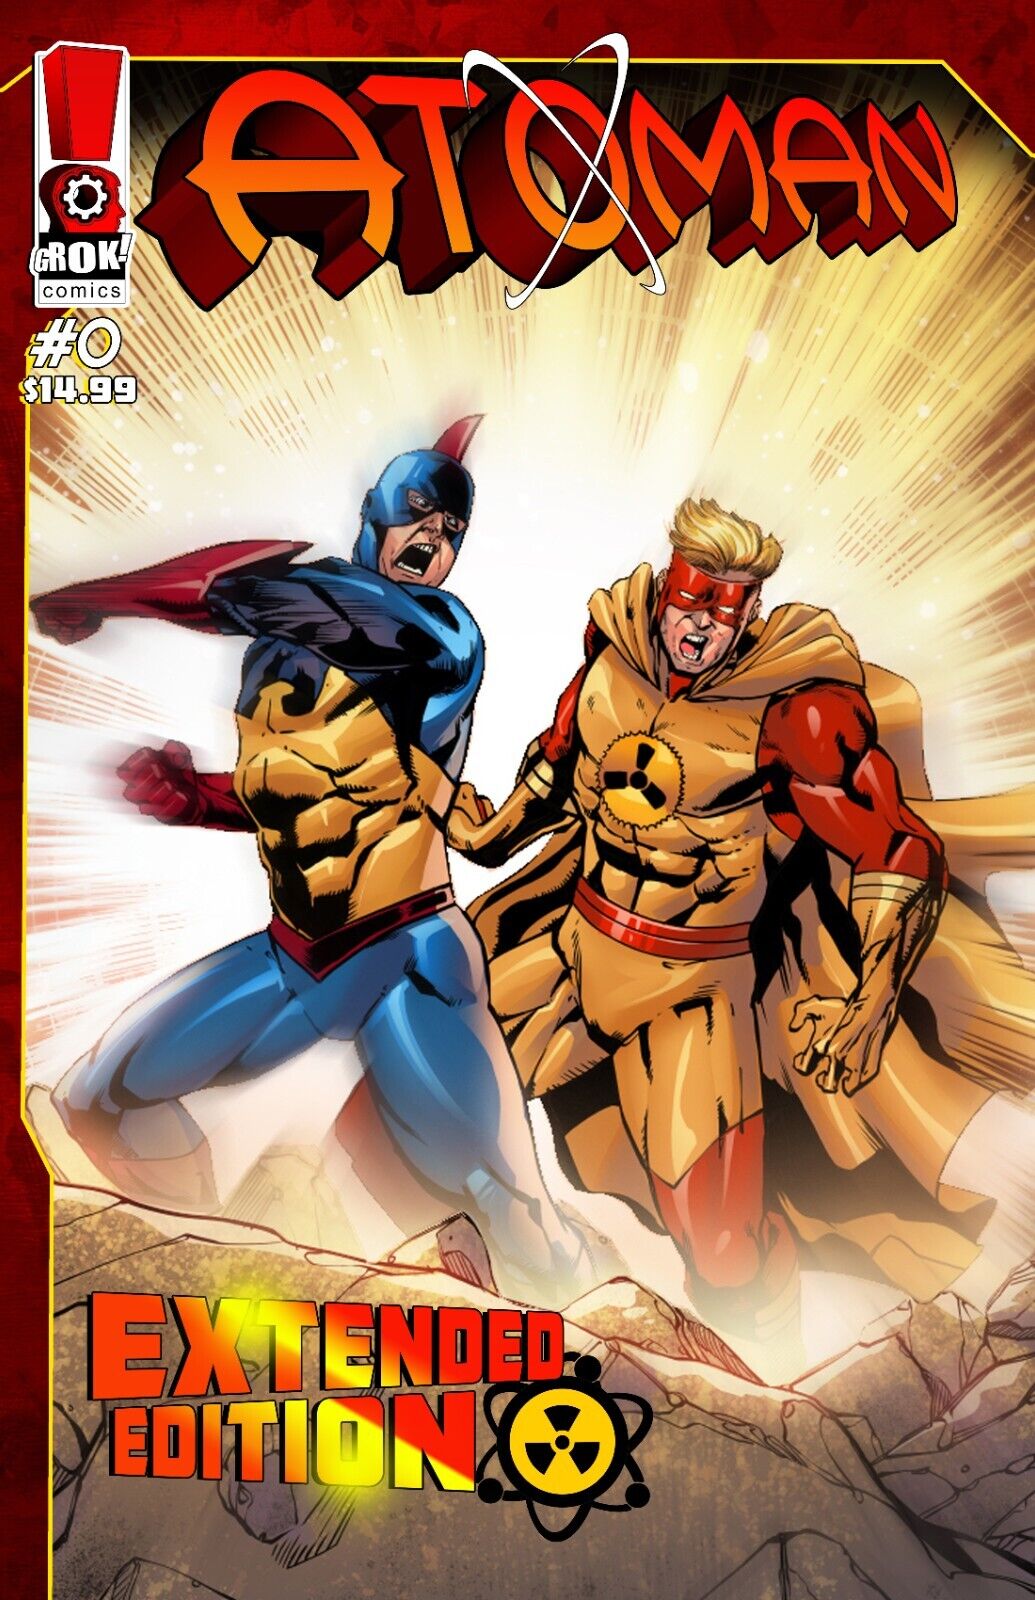 ATOMAN #0 (Deluxe) The Golden Age hero Returns  ditko, Captain Atom, Youngblood